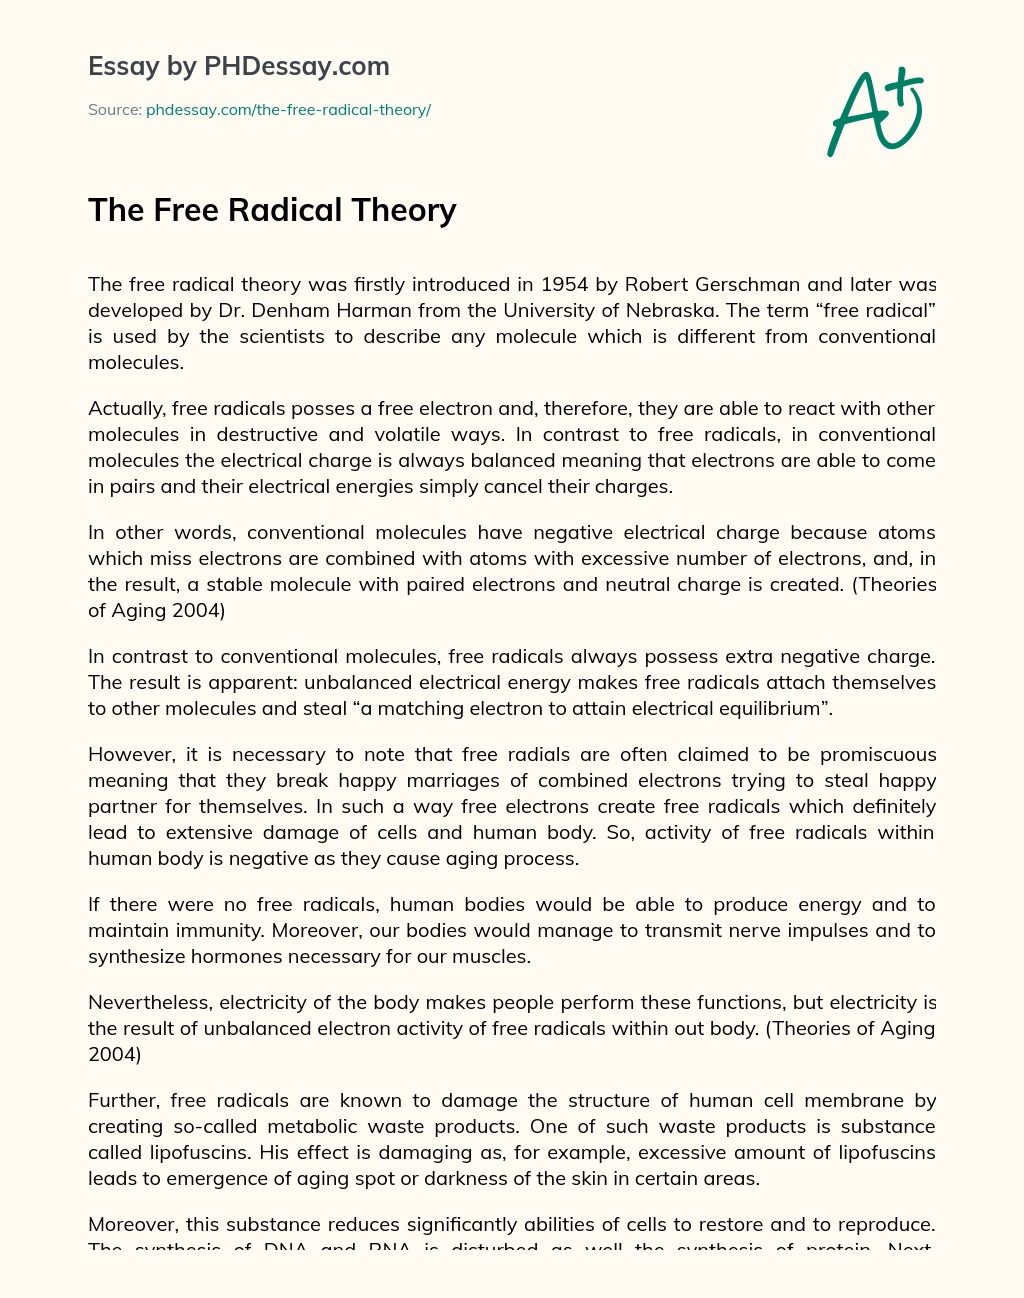 The Free Radical Theory essay